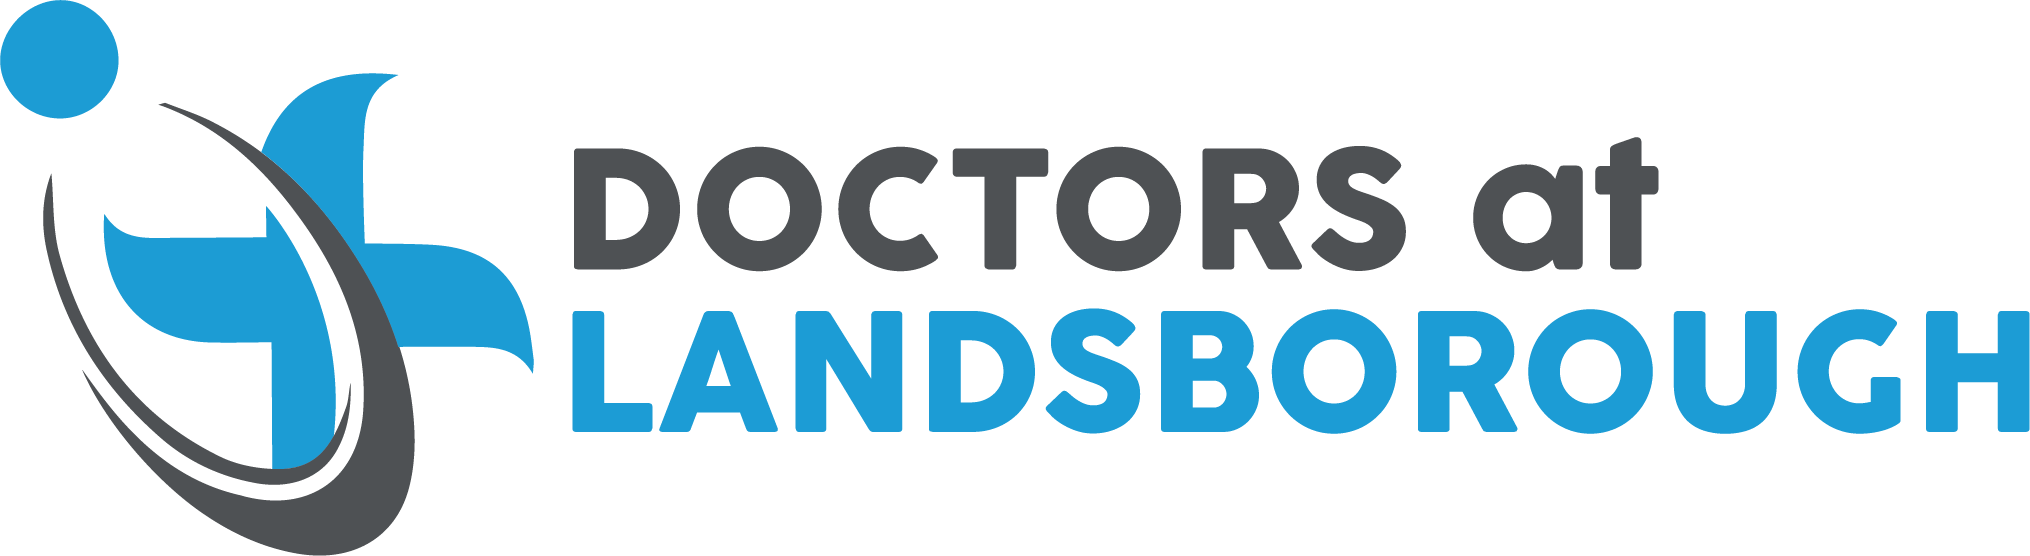 Doctors at Landsborough